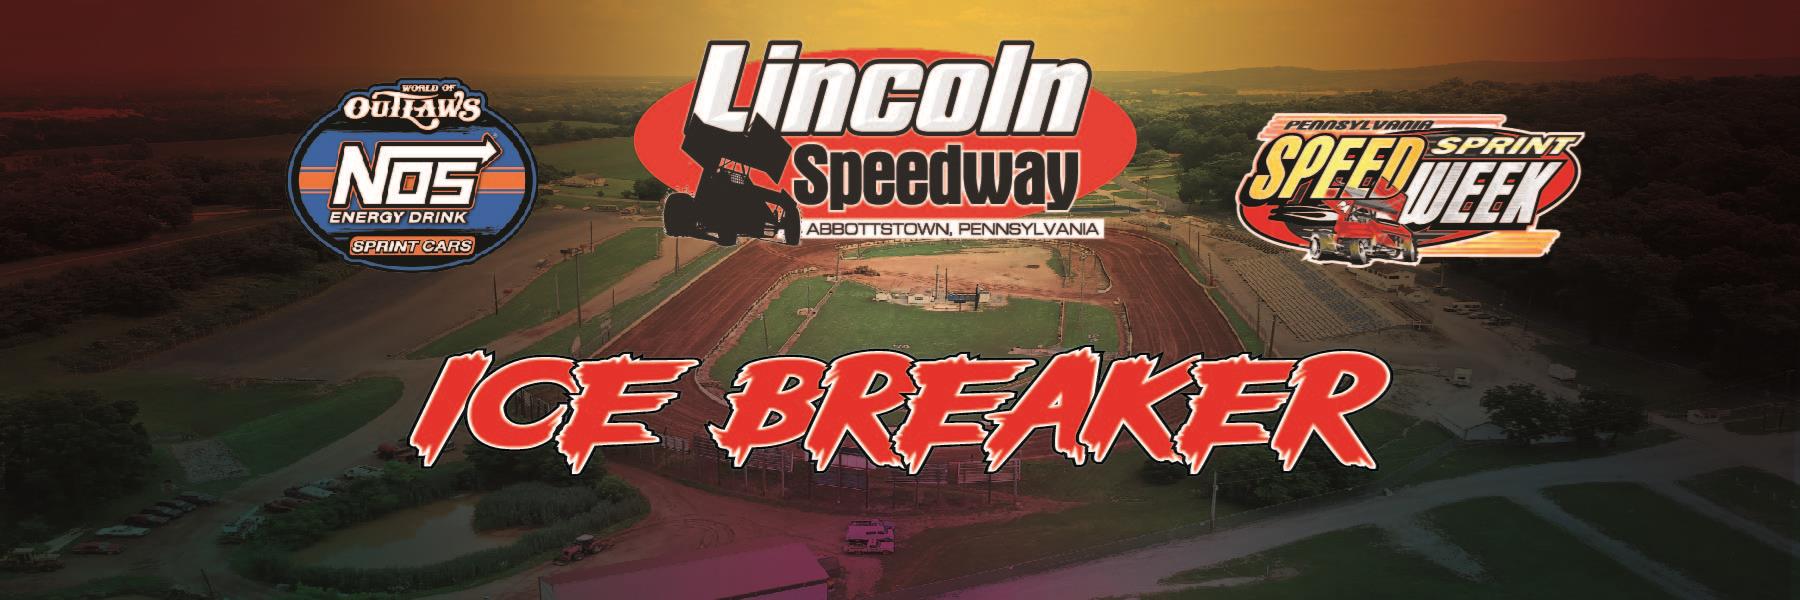 7/31/2021 - Lincoln Speedway